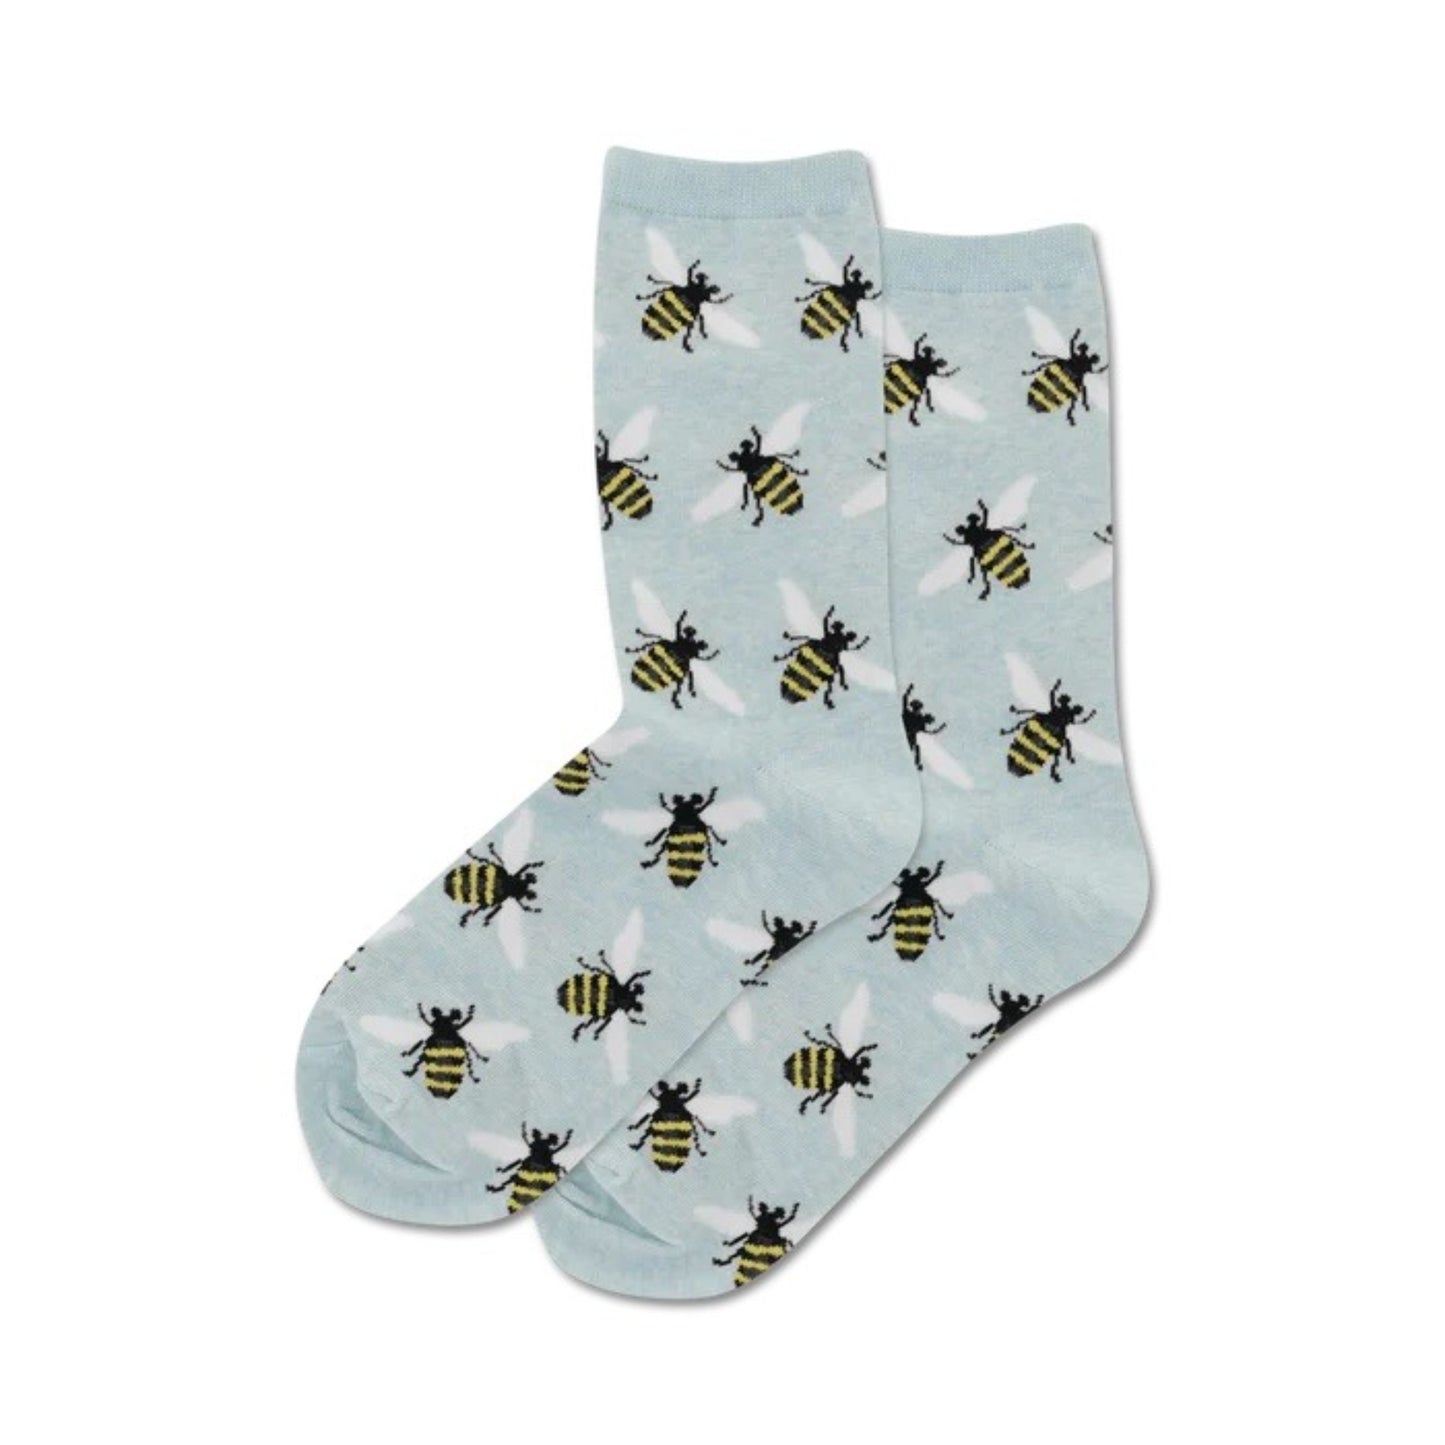 Hot Sox Bee Socks - Multiple Colors